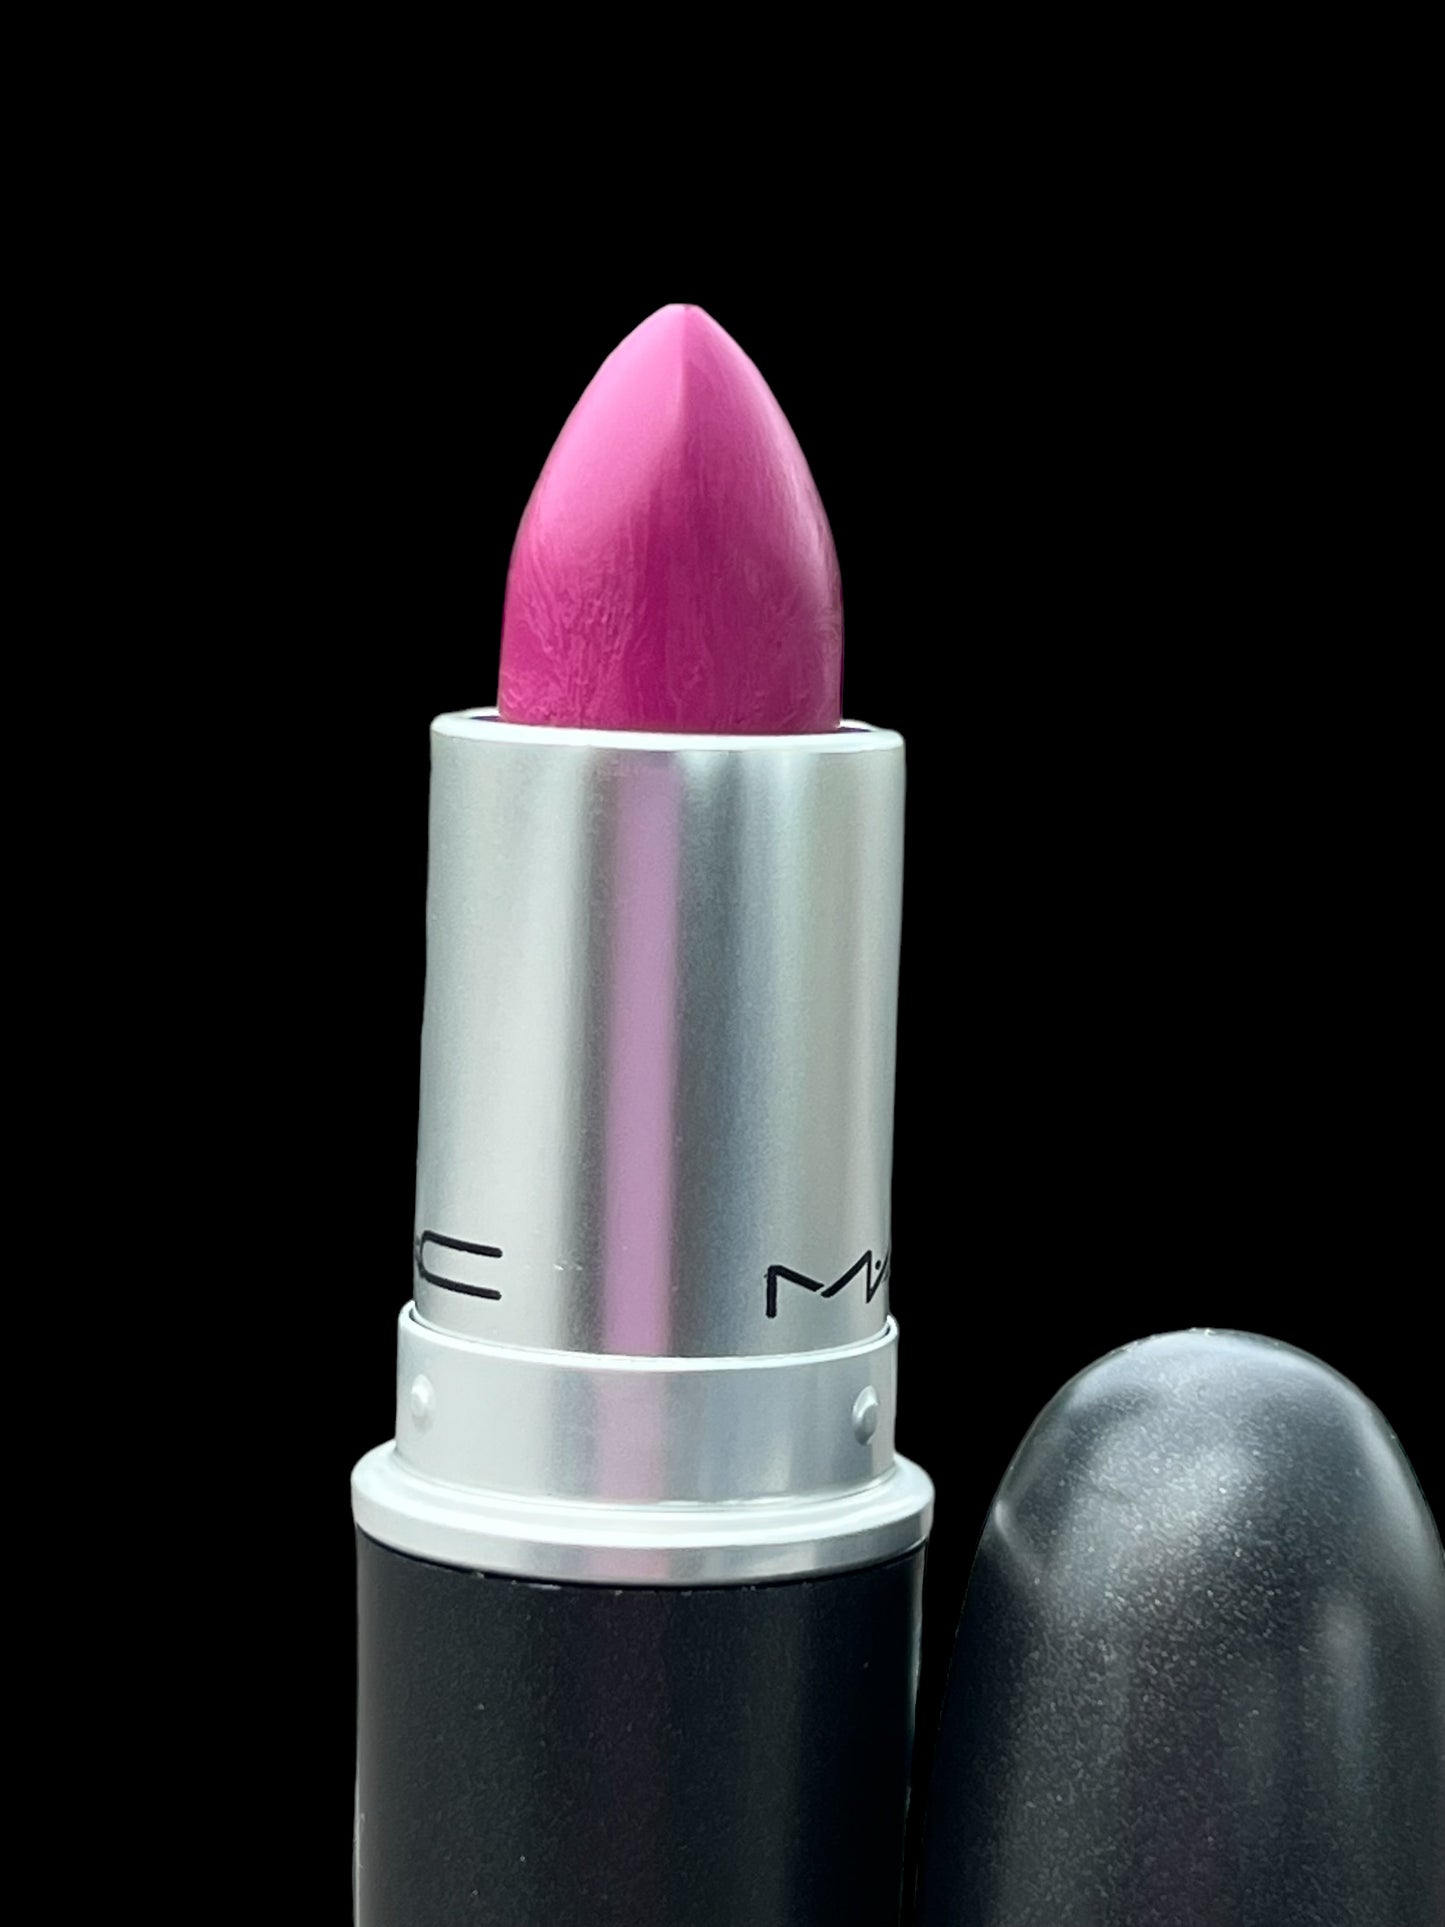 MAC Retro Matte Lipstick Flat Out Fabulous 👄